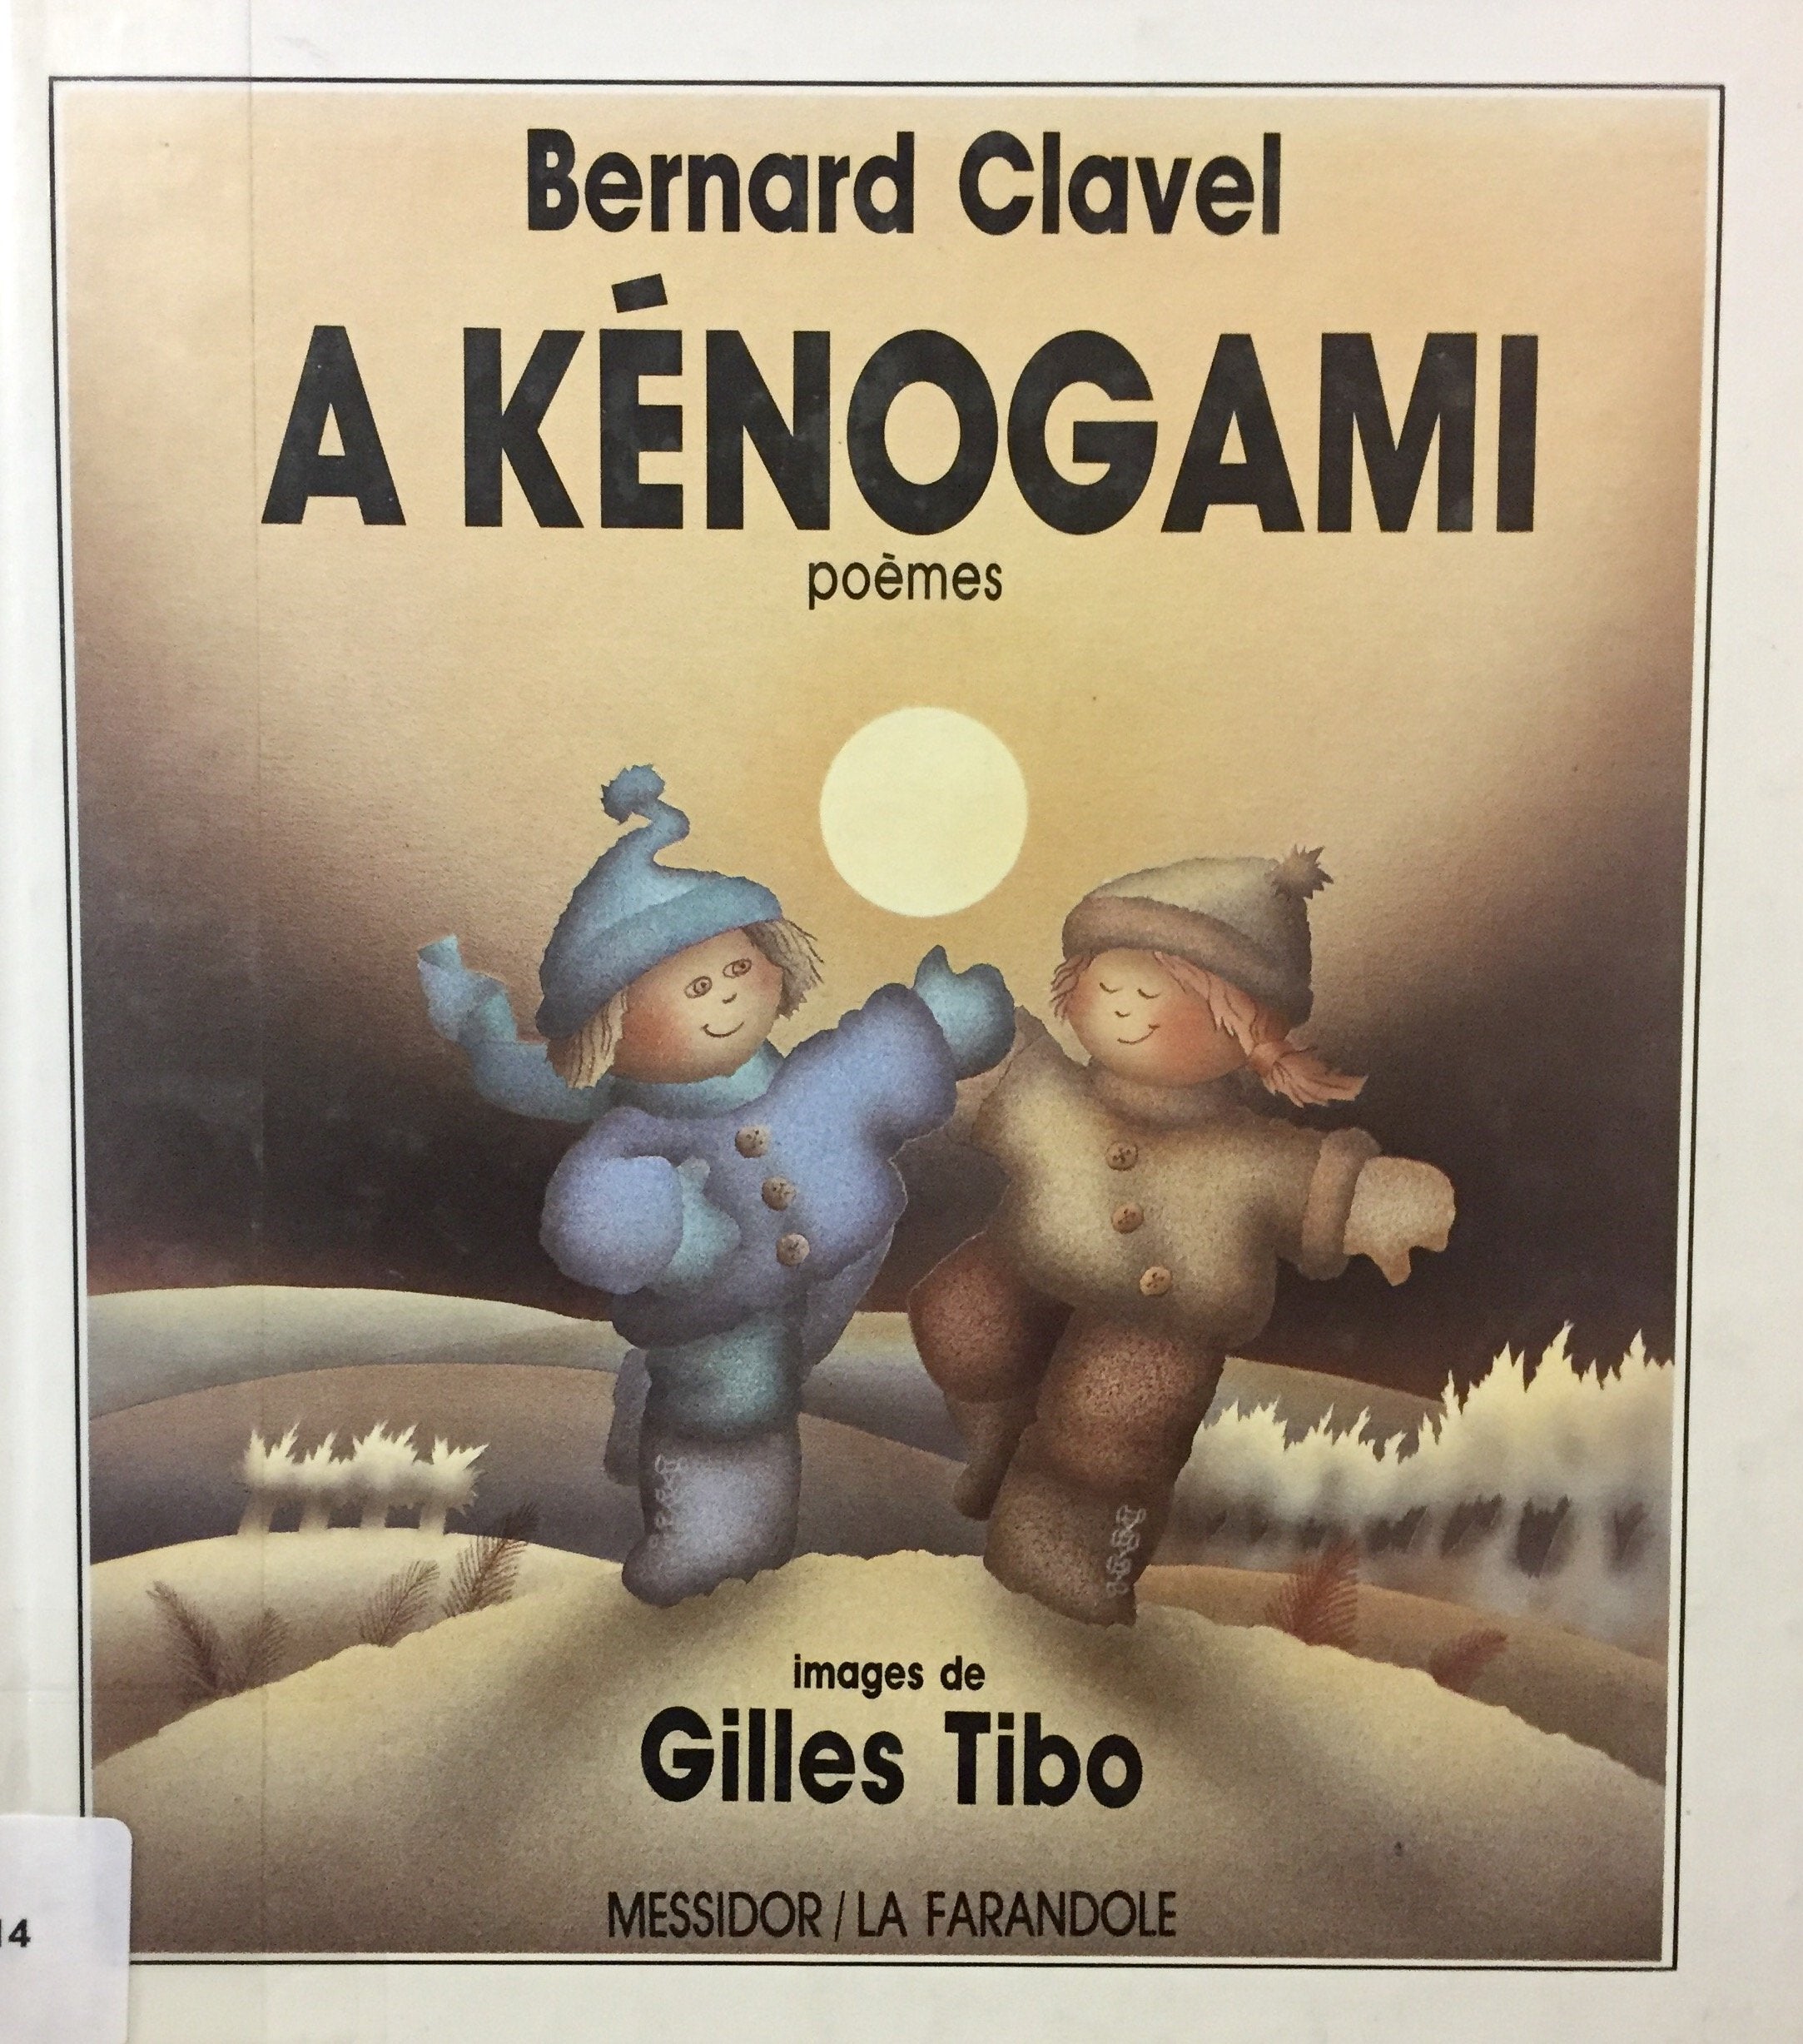 Livre ISBN 2209061644 À Kénogami : poèmes (Bernard Clavel)